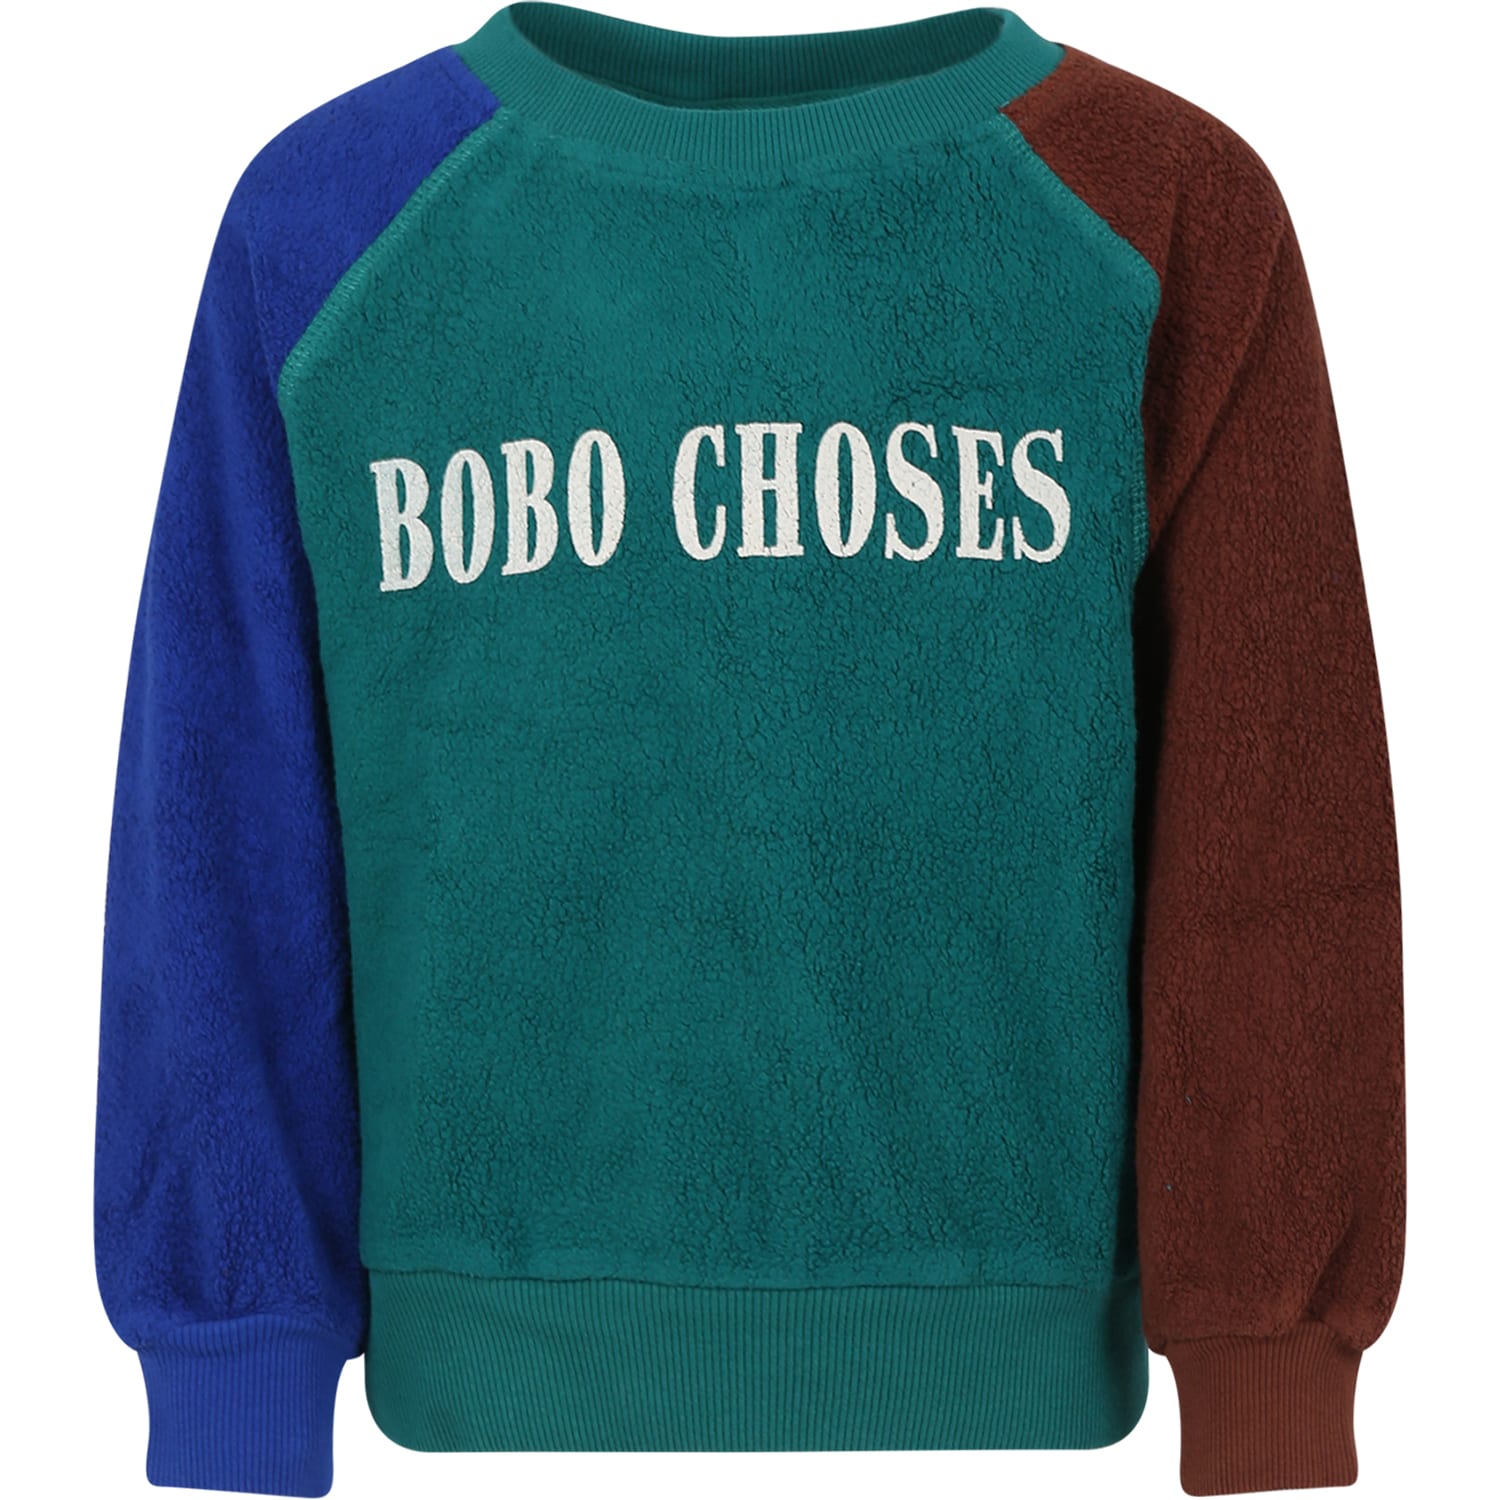 BOBO CHOSES GREEN SWEATSHIRT FOR KIDS WITH LOGO